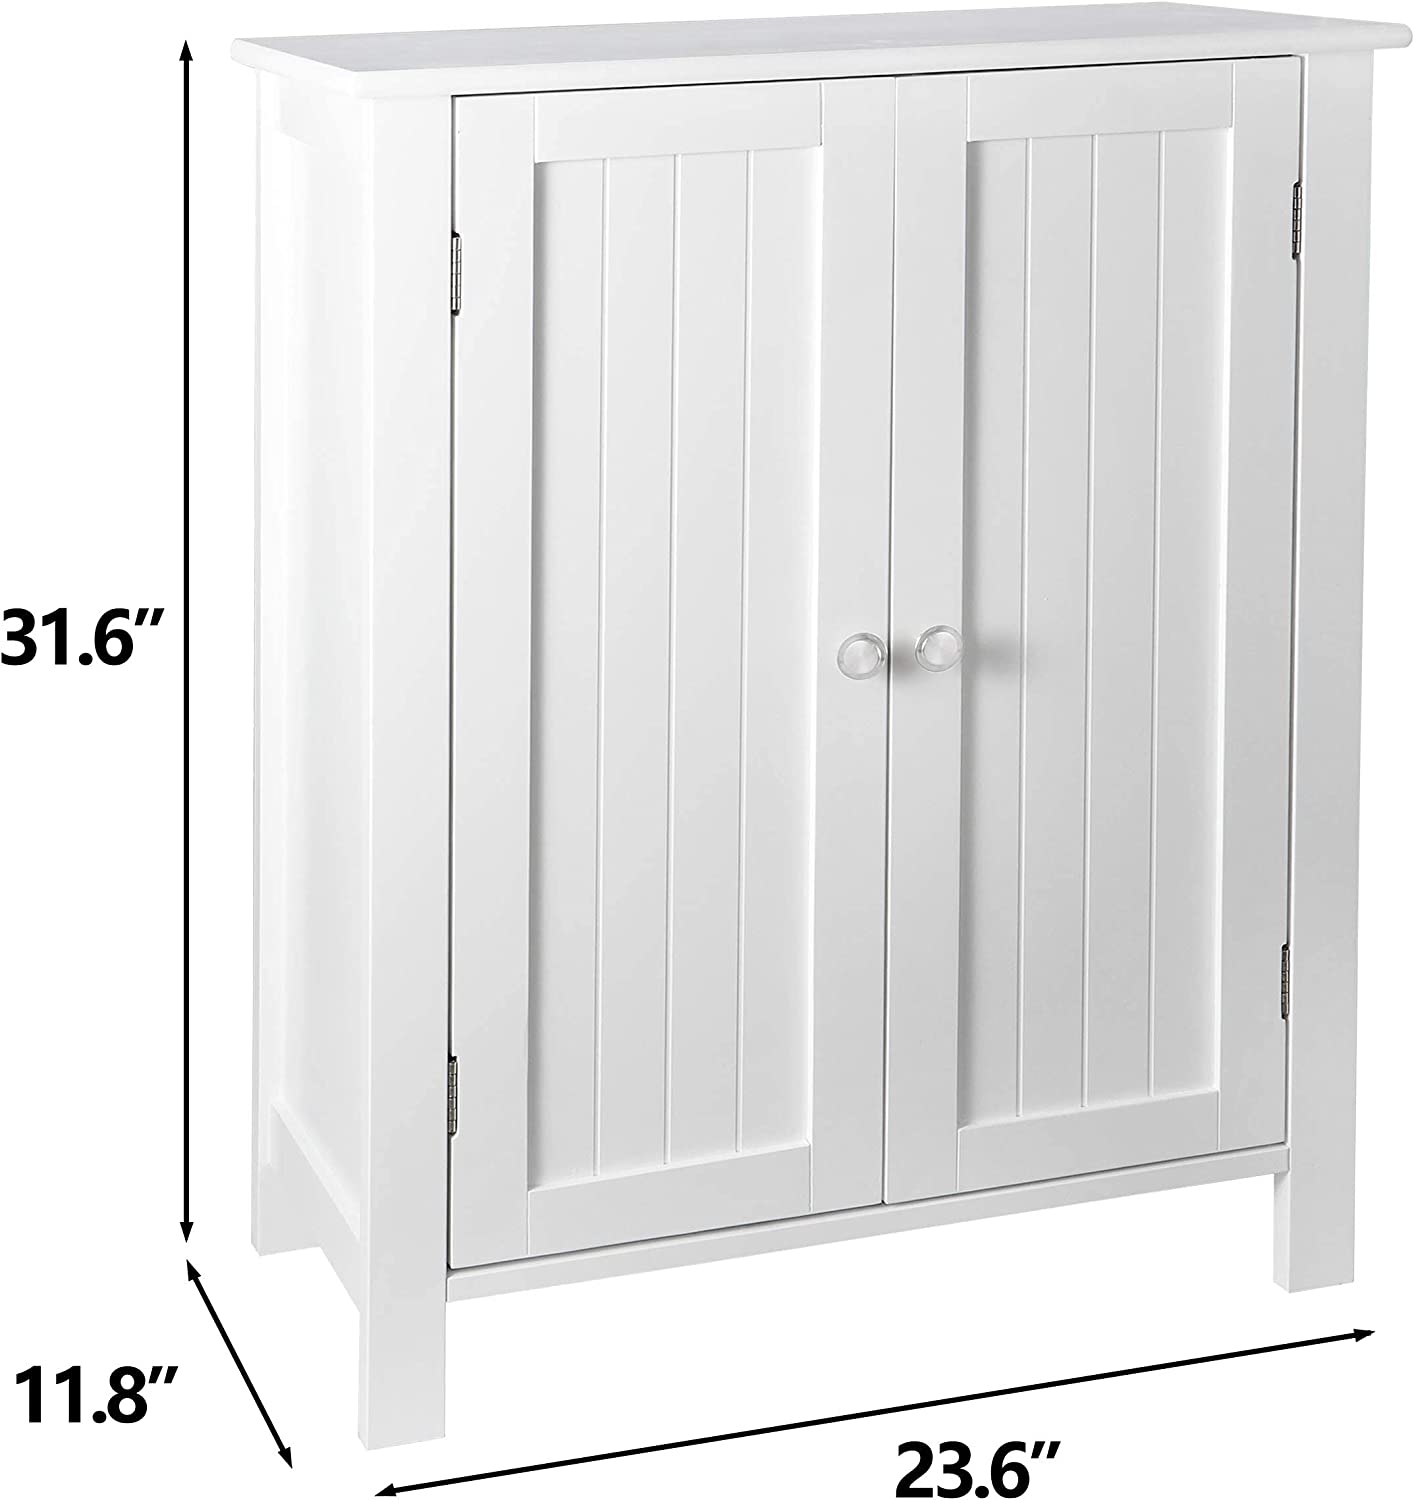 Bathroom Floor Storage Cabinet with Double Door + Adjustable Shelf, Wooden Organizer Cabinet for Living Room, Bathroom, Bedroom, Modern Home Furniture, White